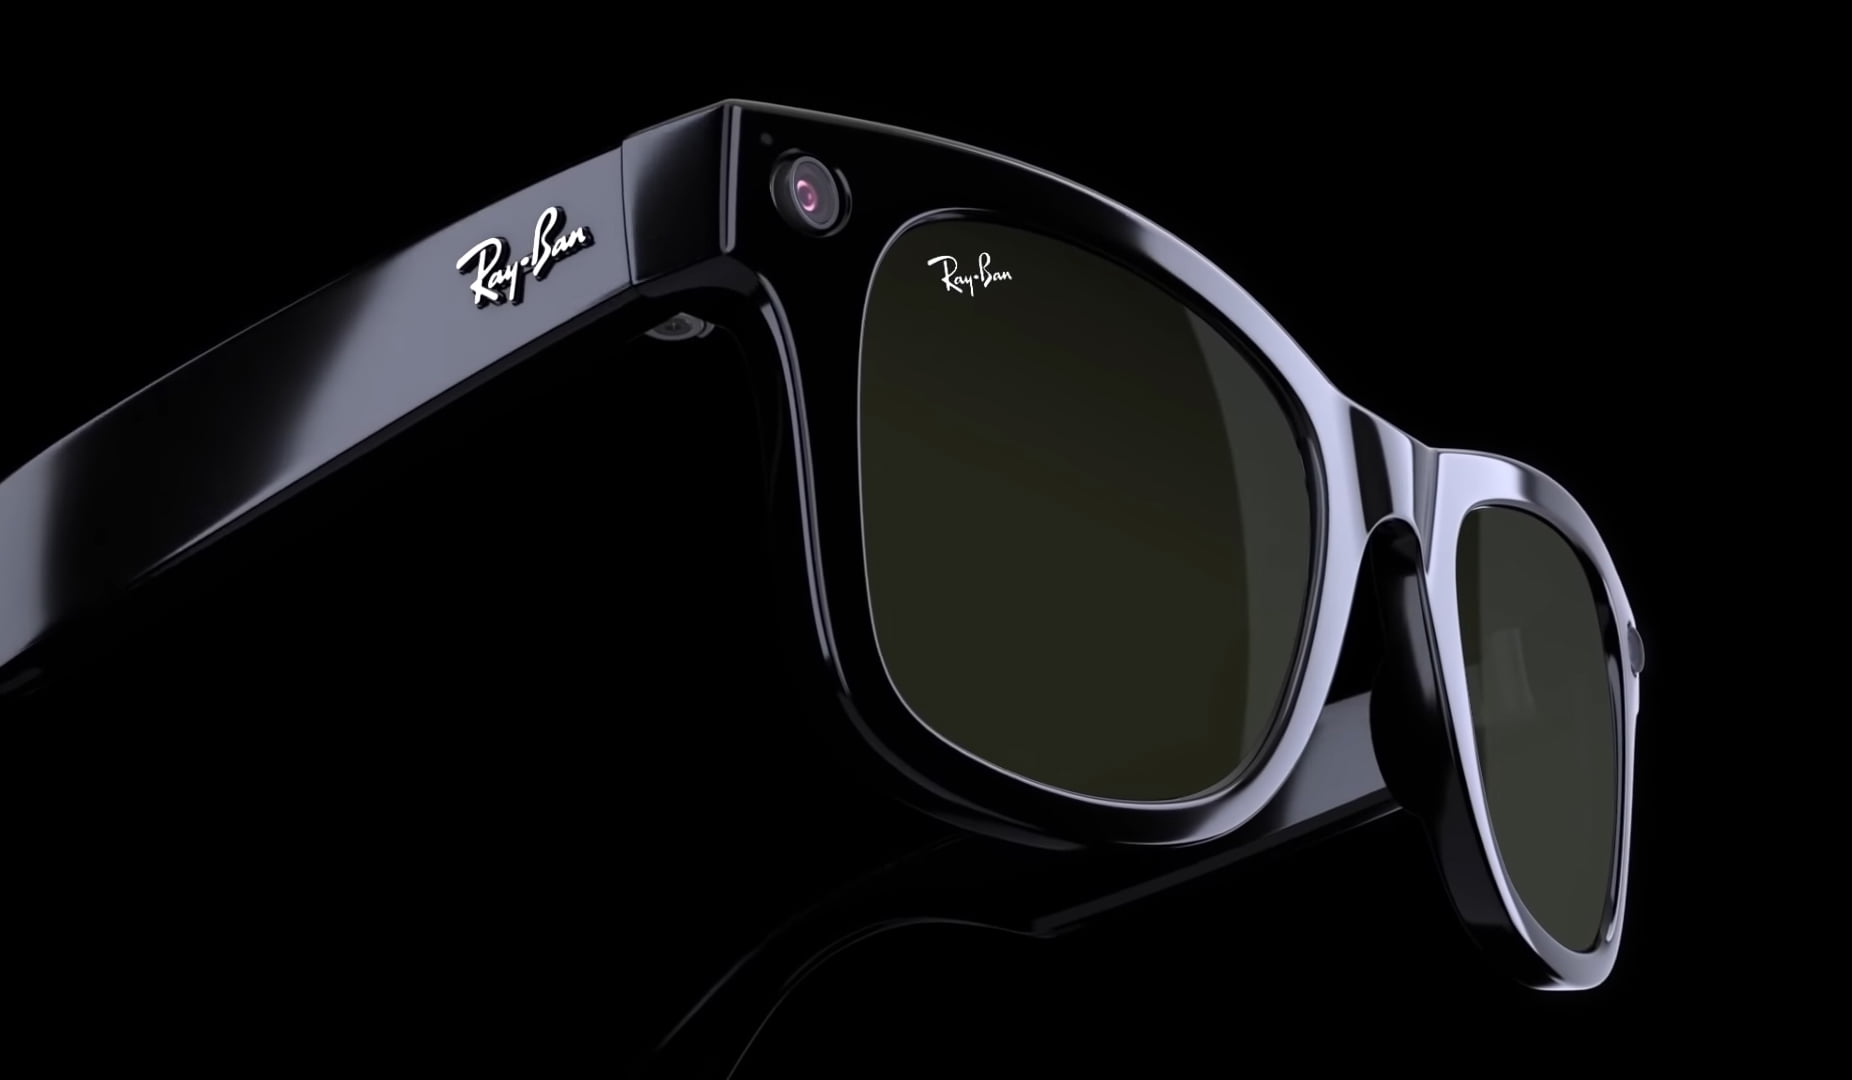 The world's largest eyewear manufacturer is now developing smartglasses